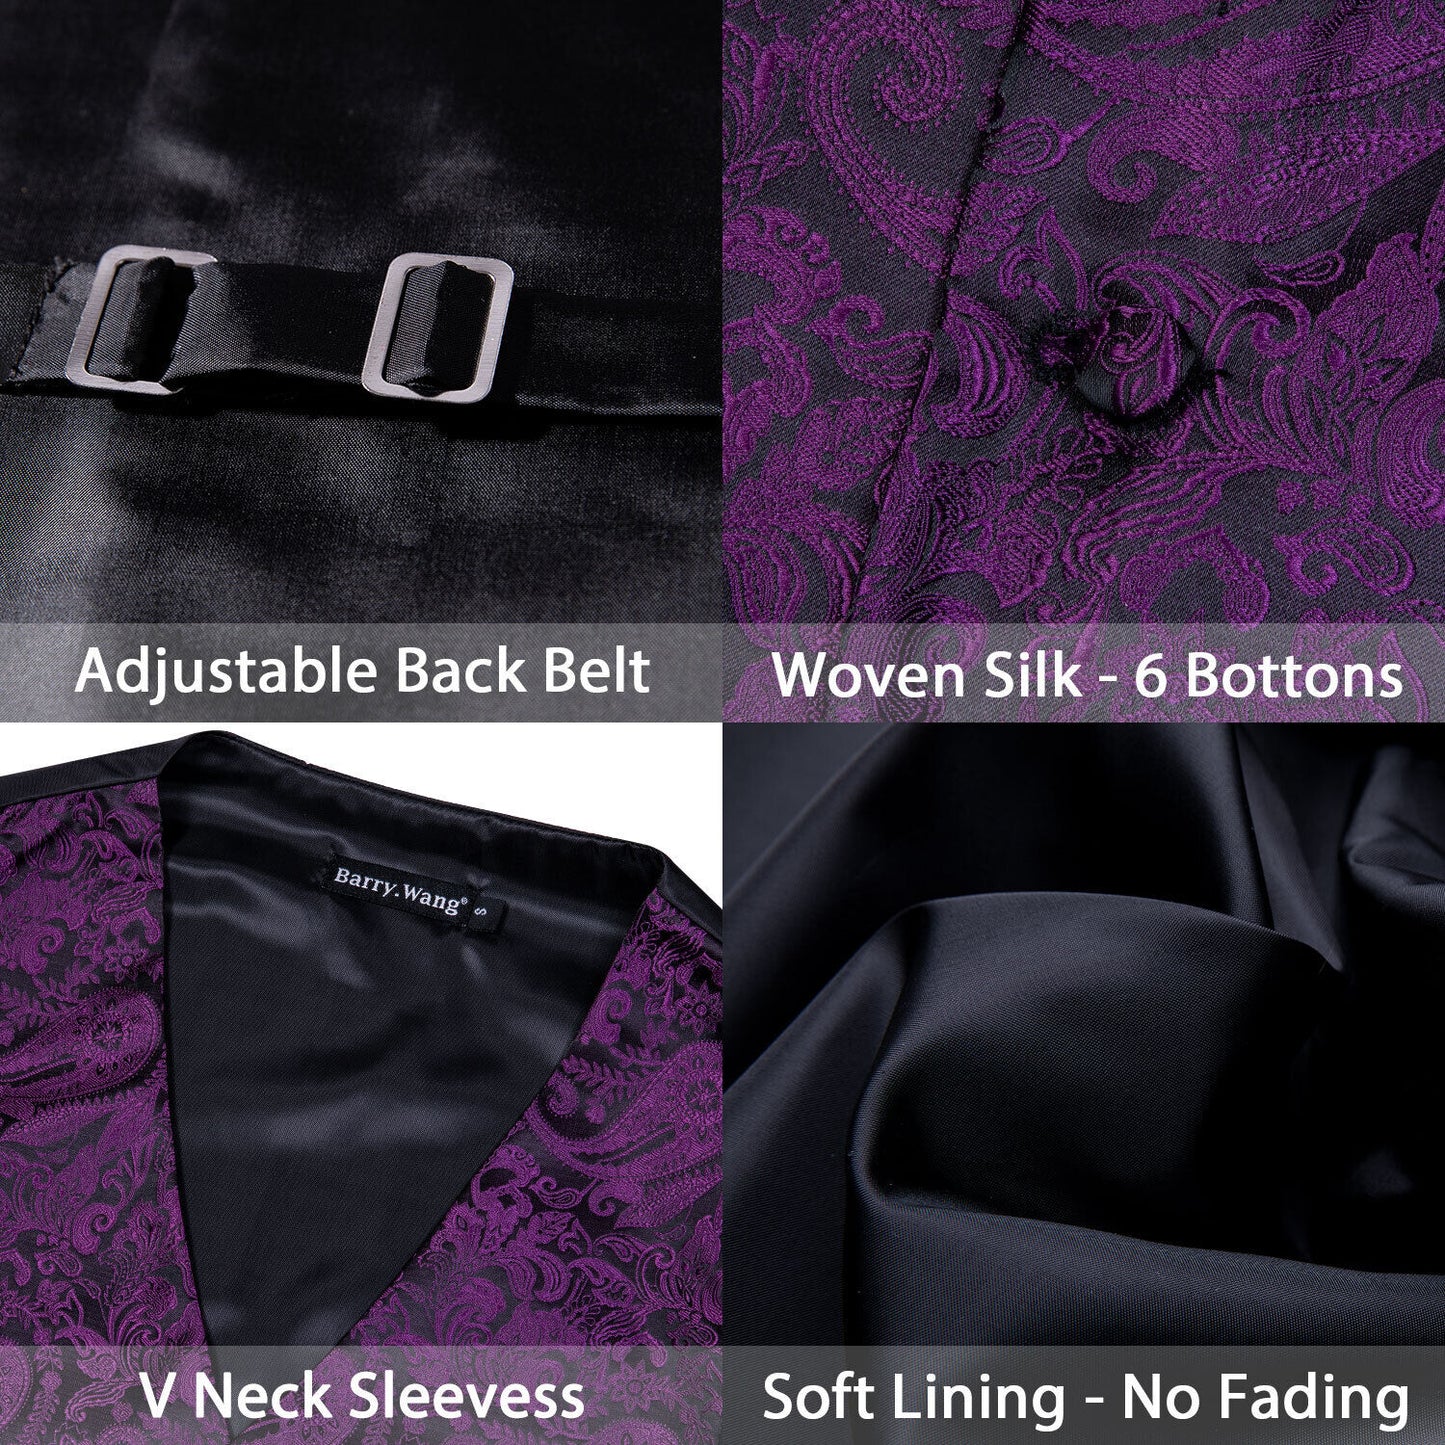 Designer Floral Waistcoat Silky Novelty Vest Purple Paisley